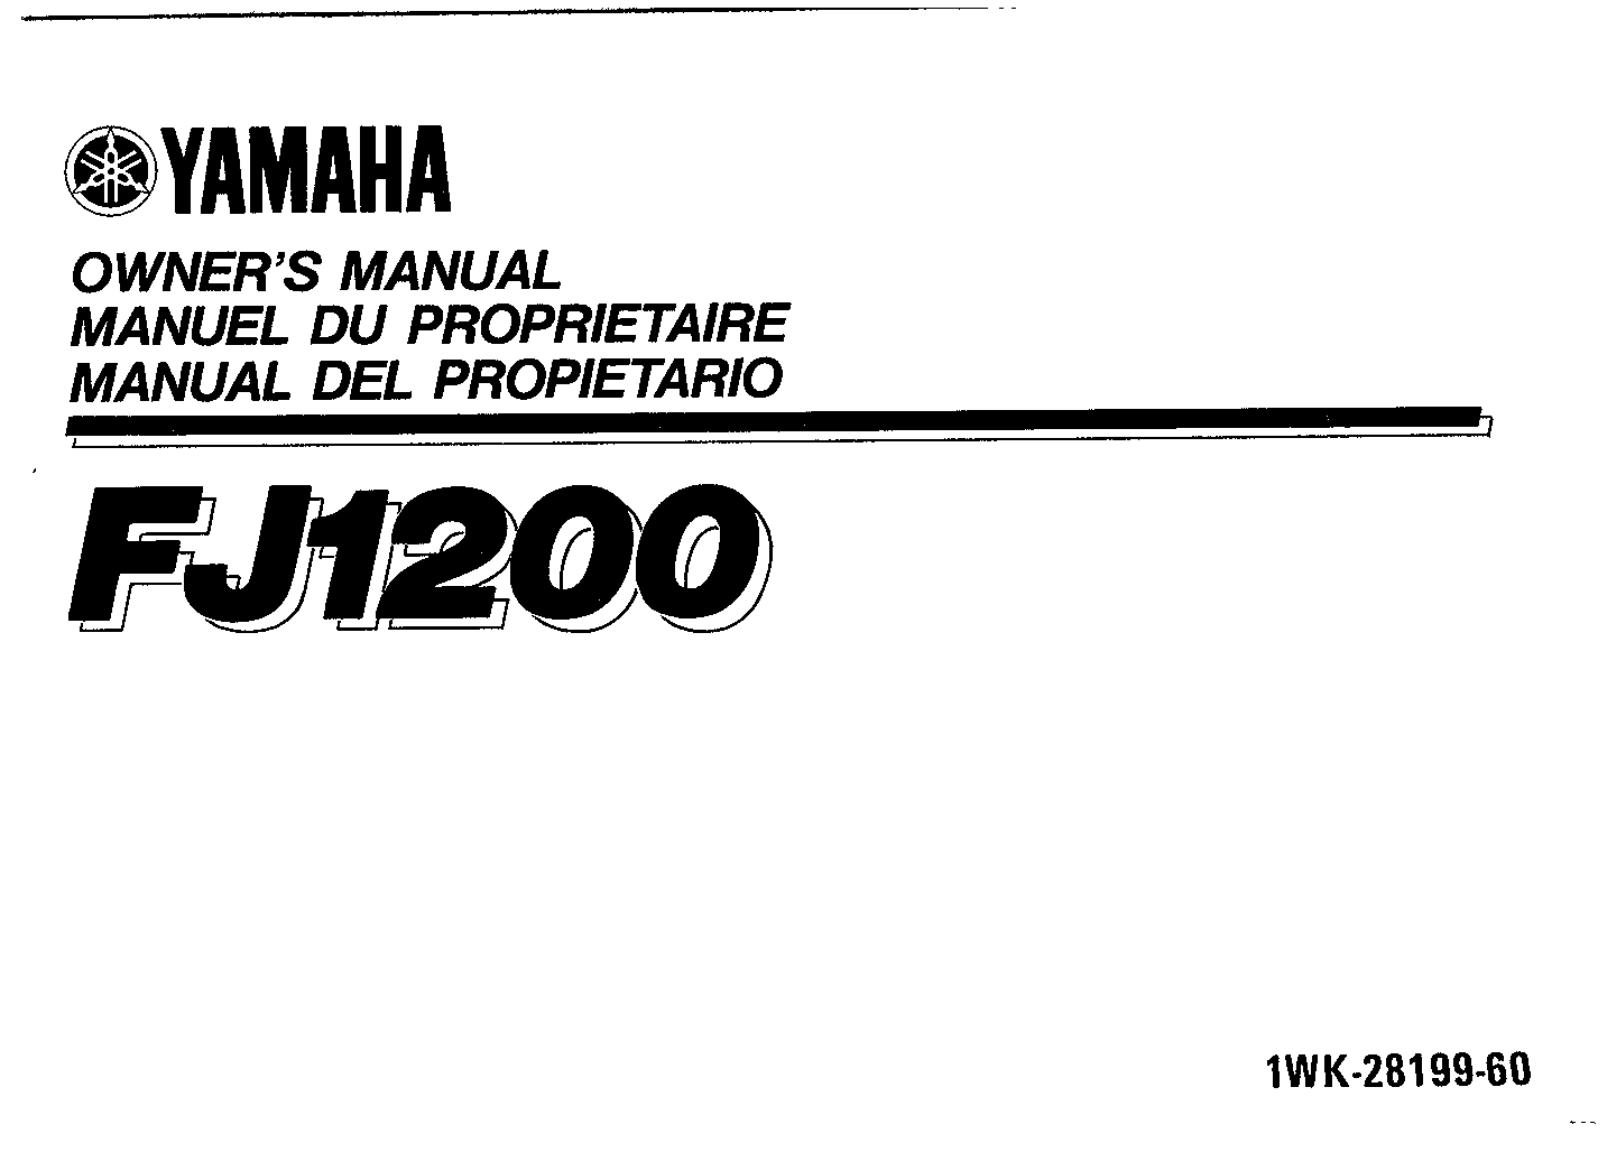 Yamaha FJ1200 1986 Owner's manual